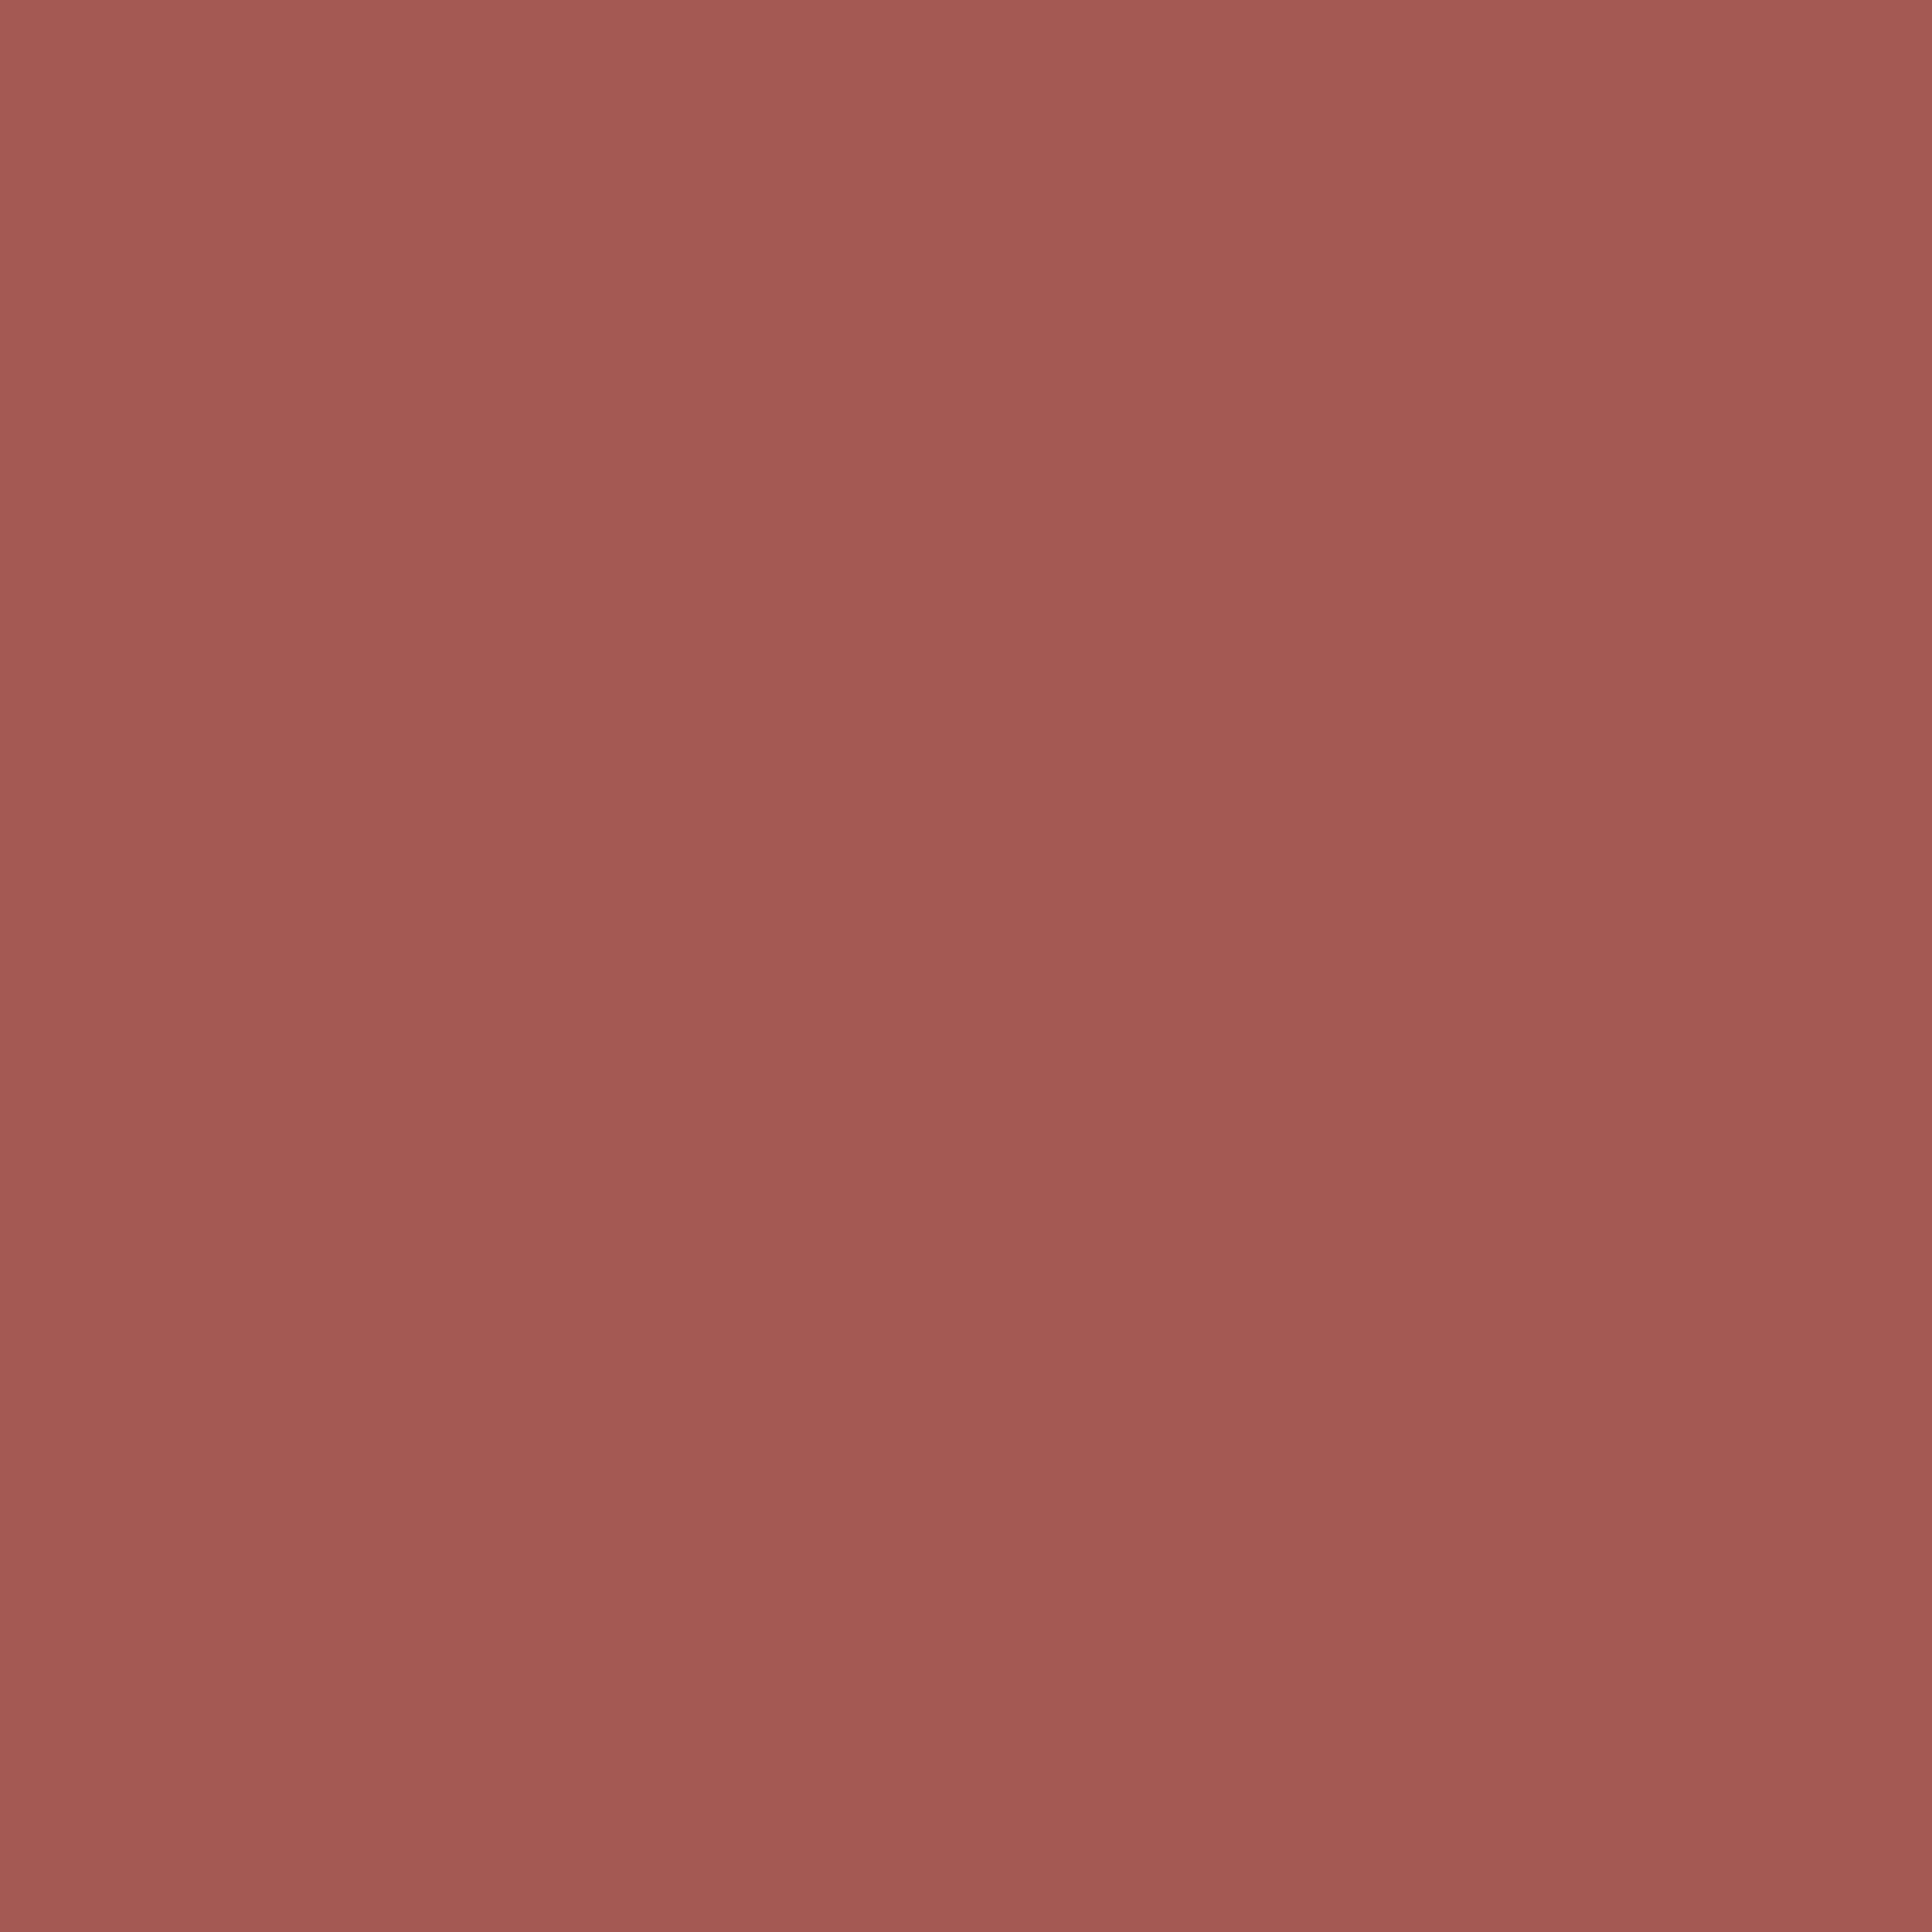 2048x2048 Redwood Solid Color Background